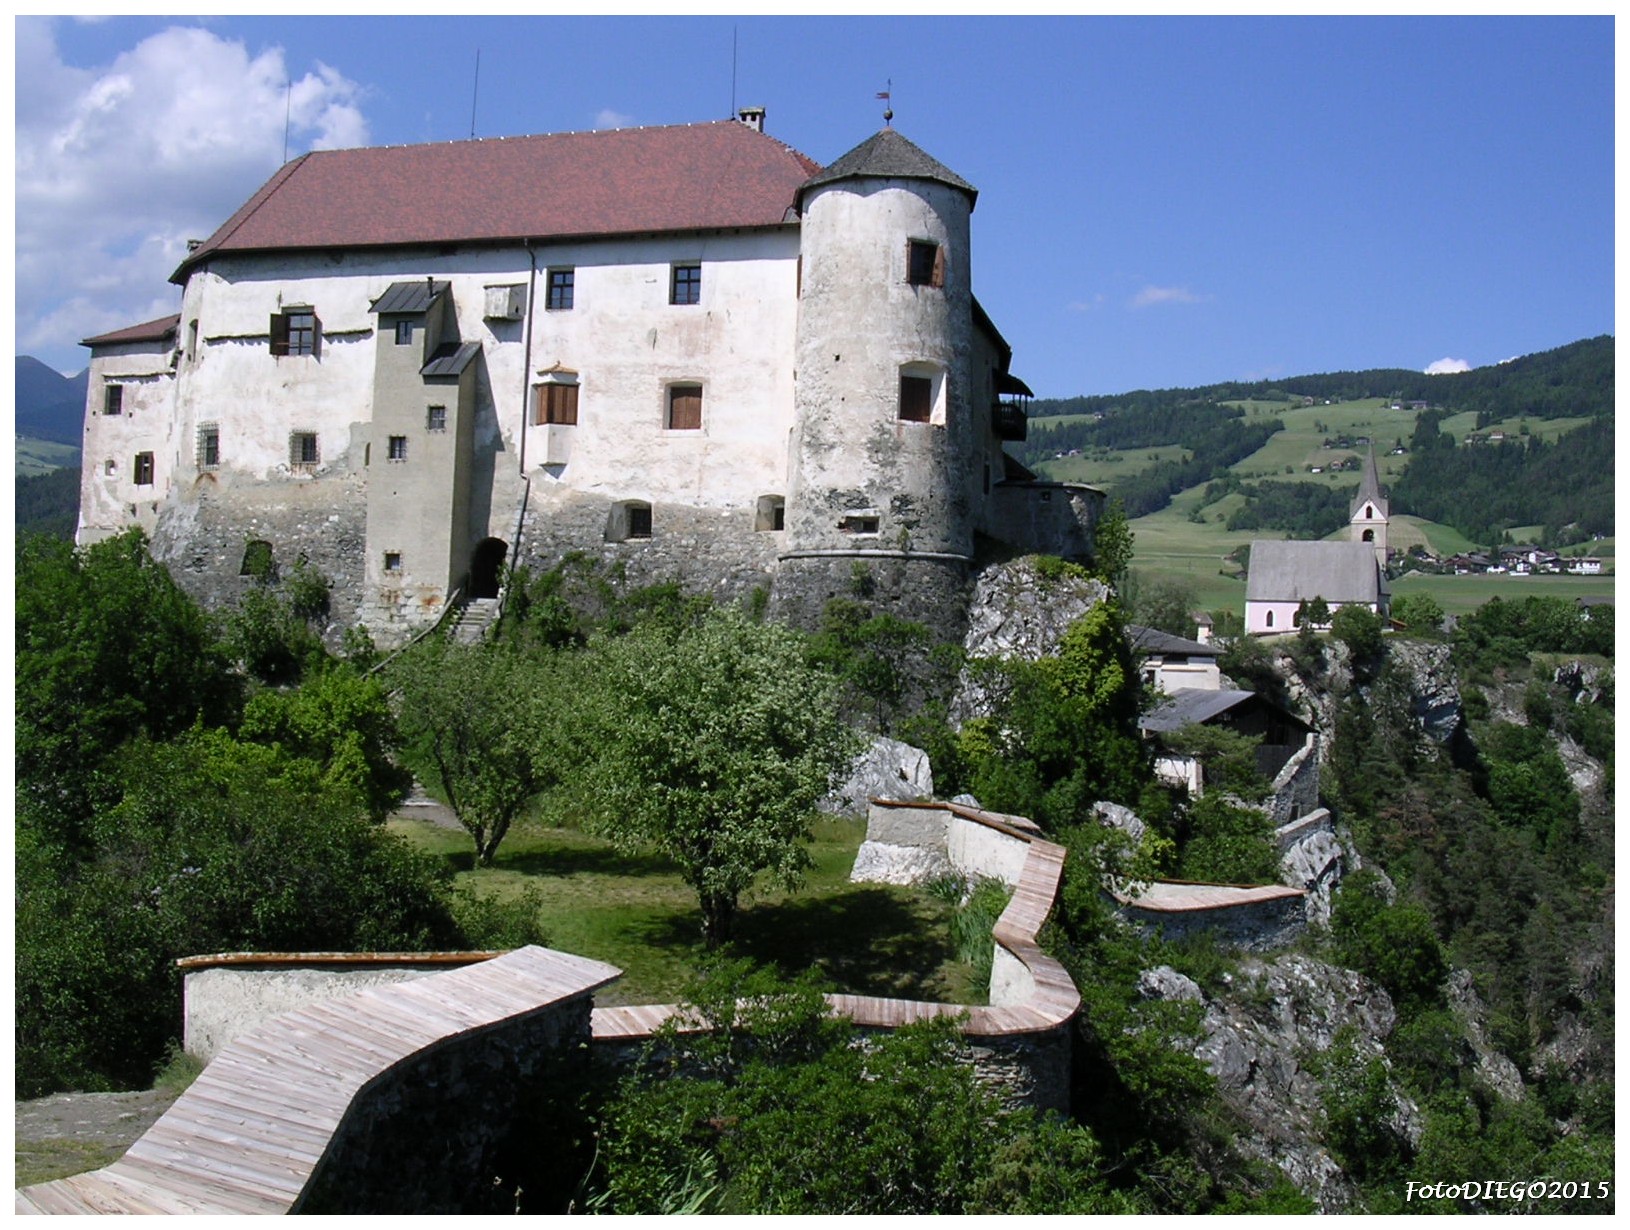 Rodengo - The castle...